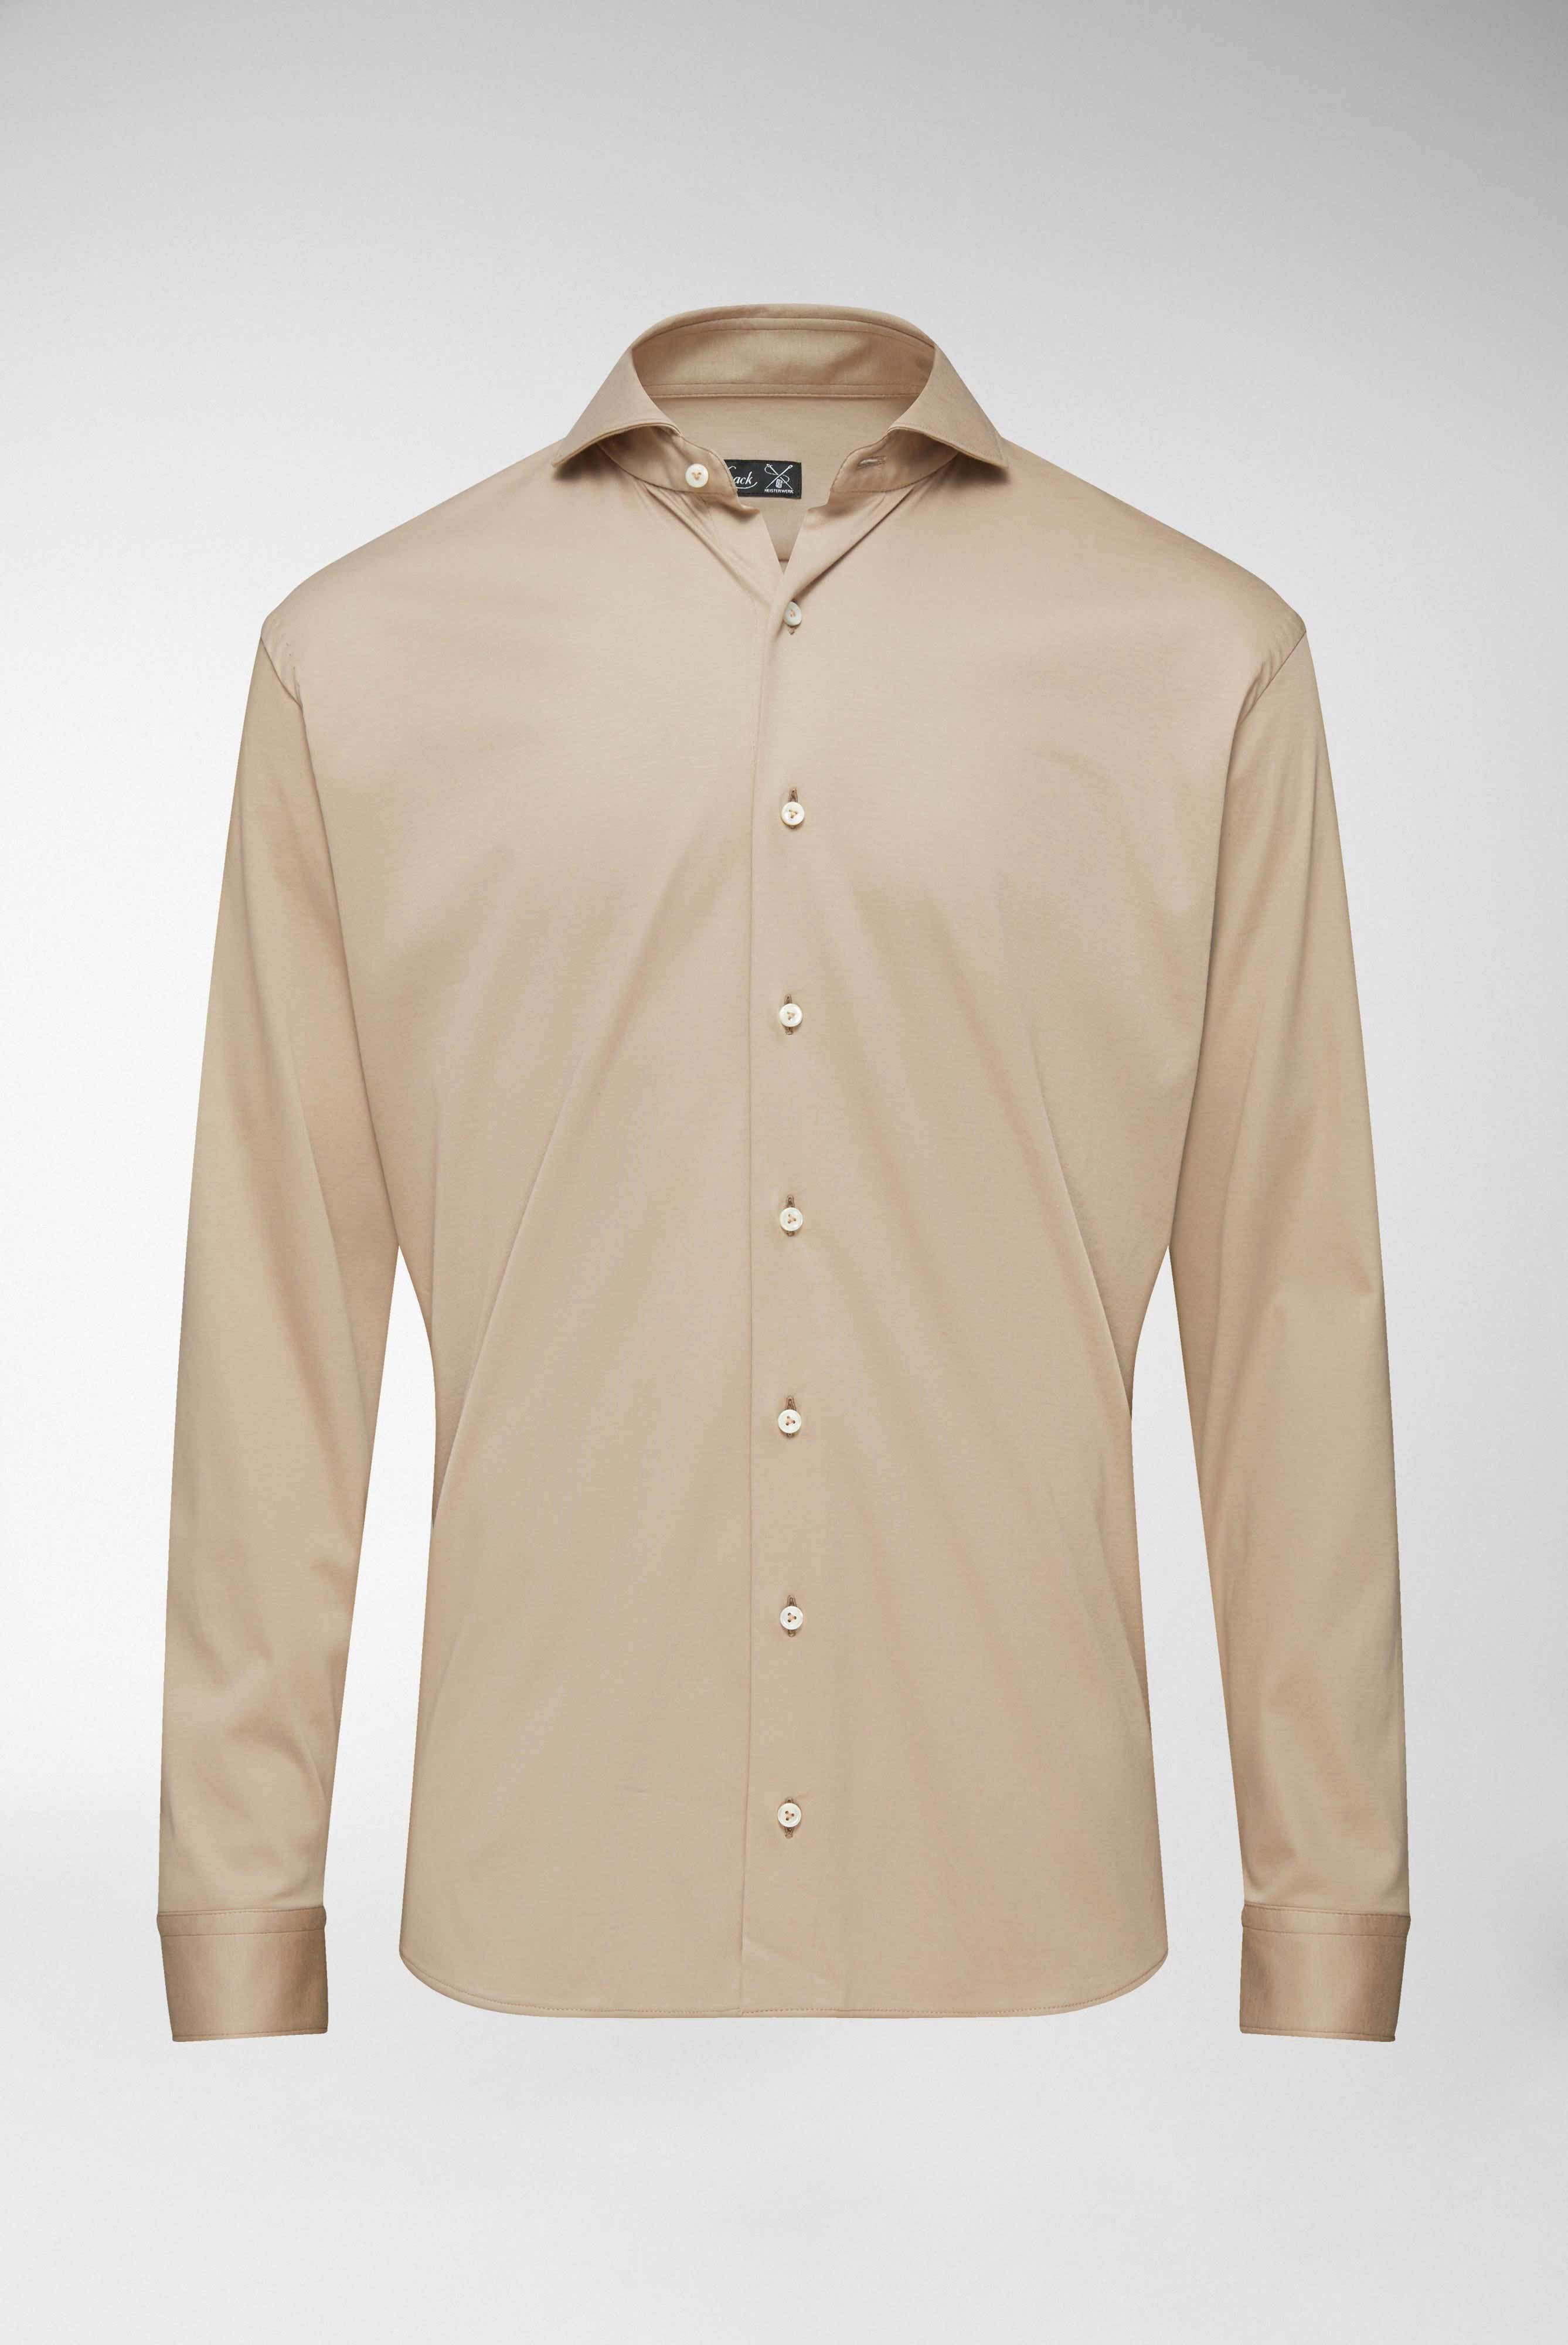 Casual Hemden+Jersey Hemd aus Schweizer Baumwolle Tailor Fit+20.1683.UC.180031.140.XXL